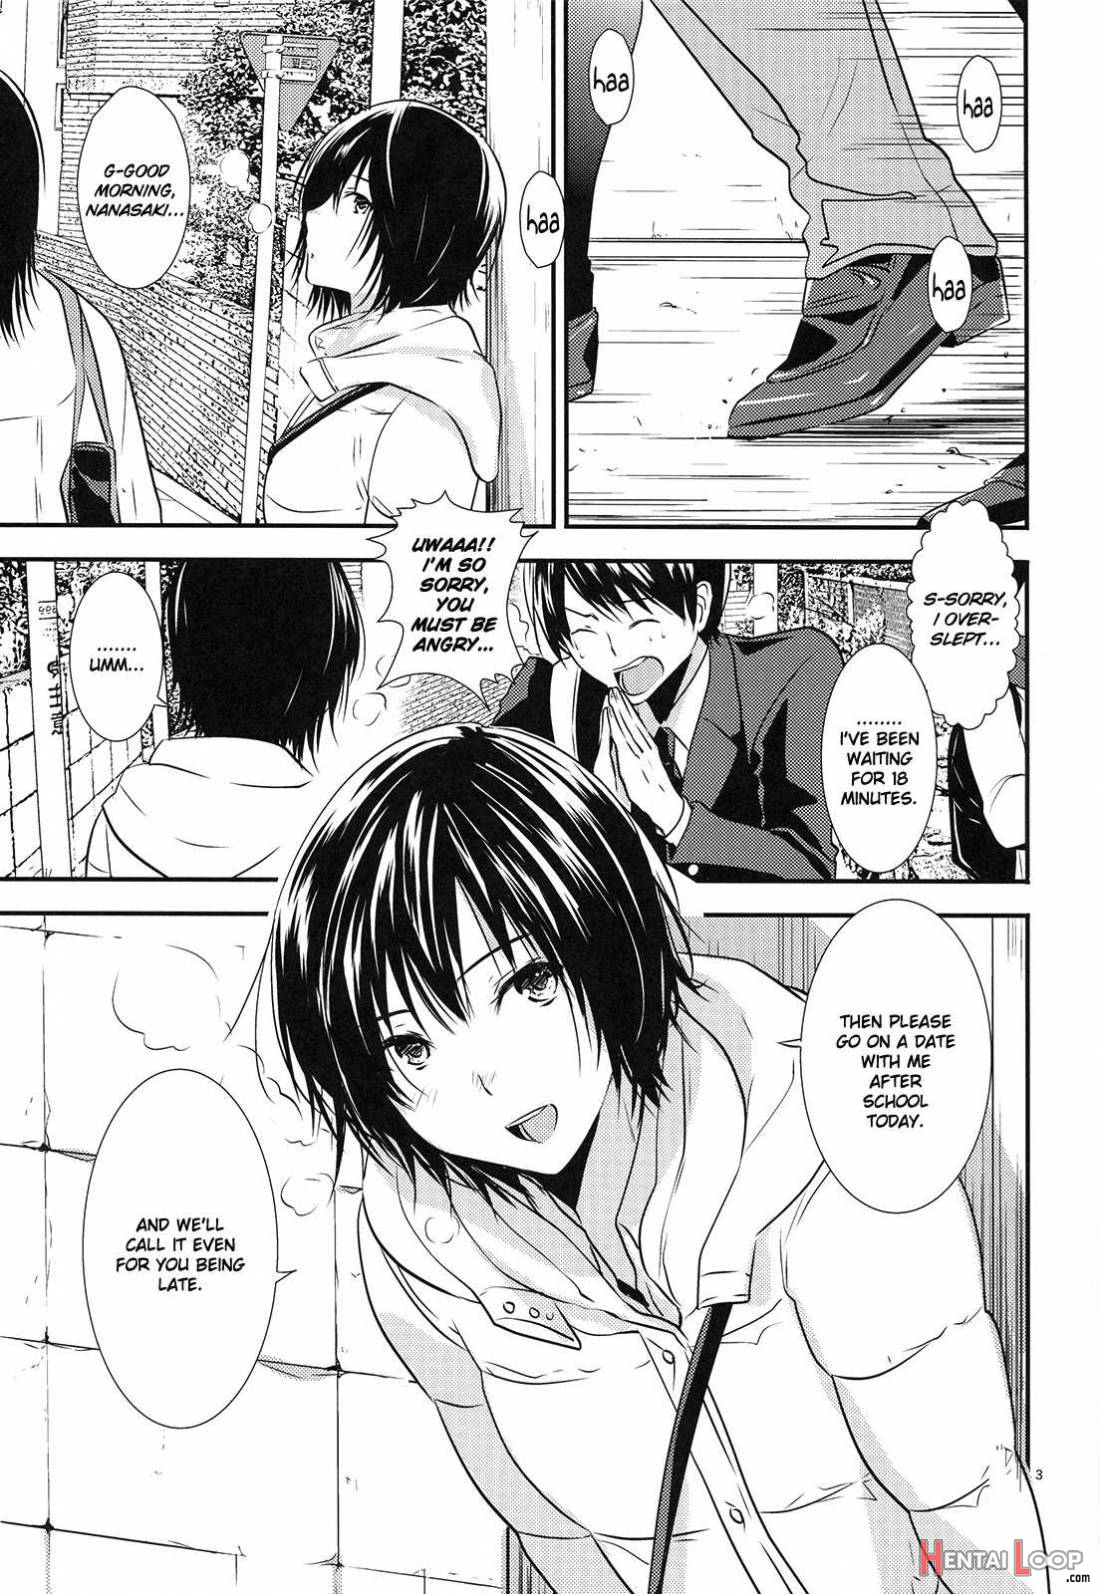 Nanasaki page 2